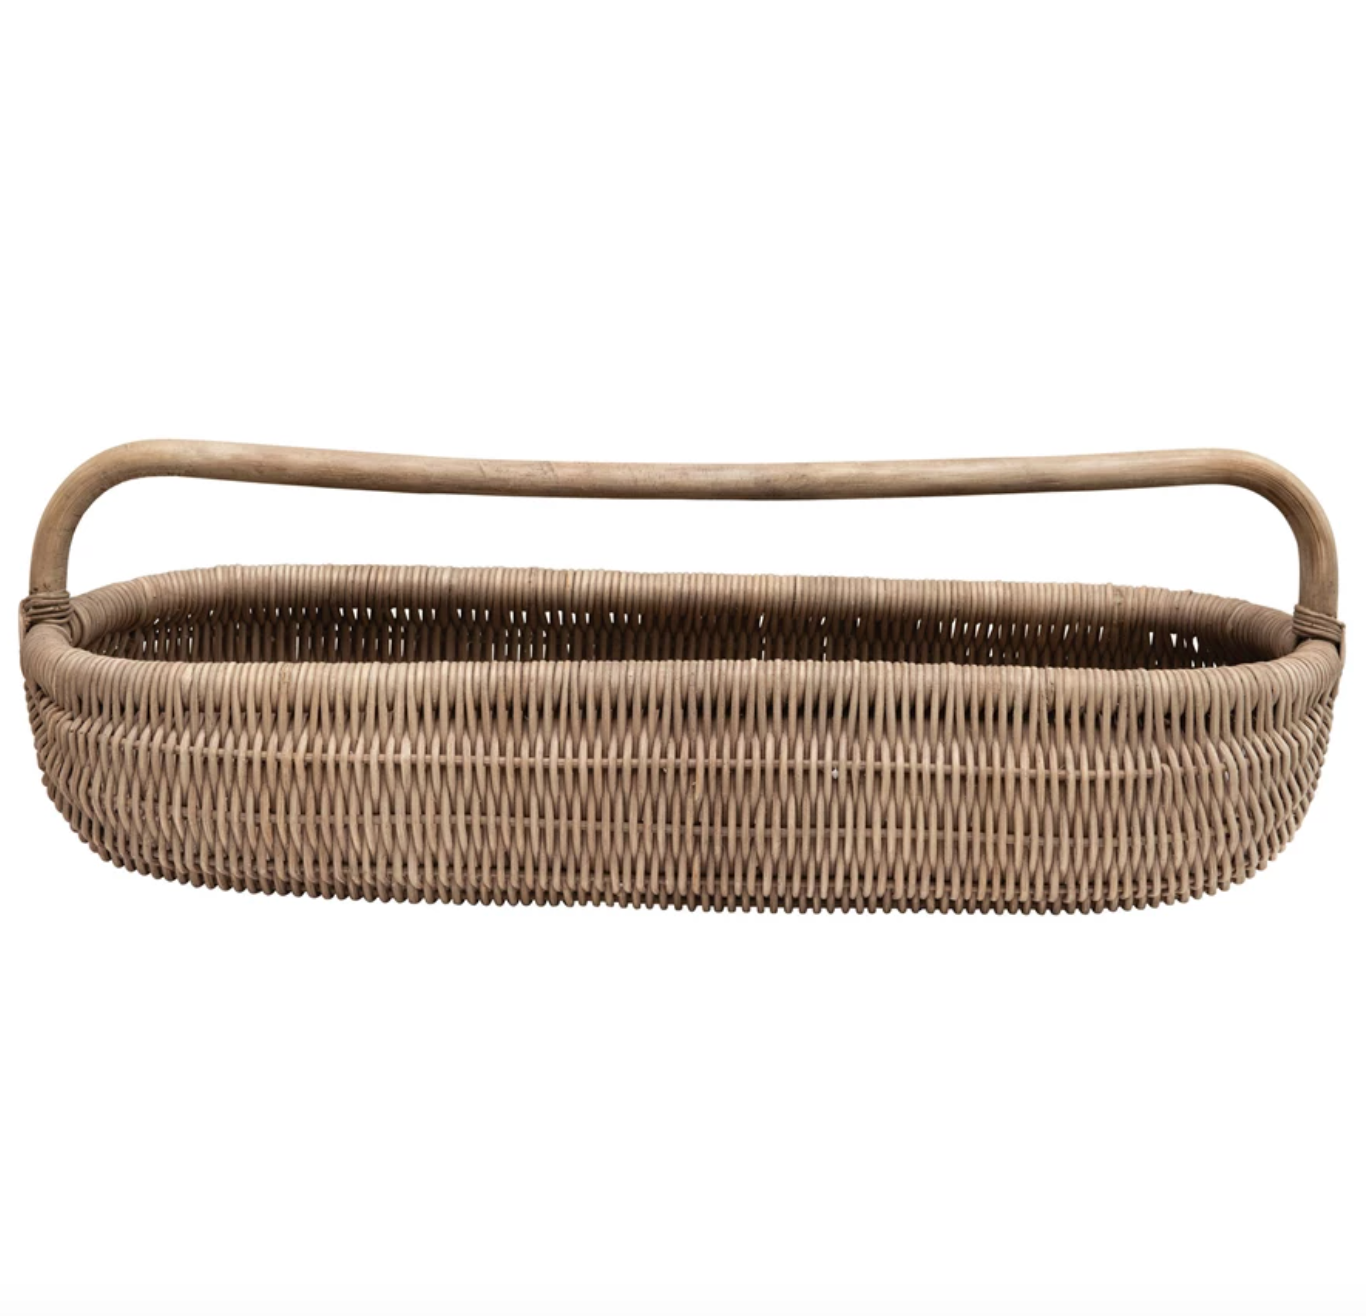 Hand-Woven Rattan Basket with Handle